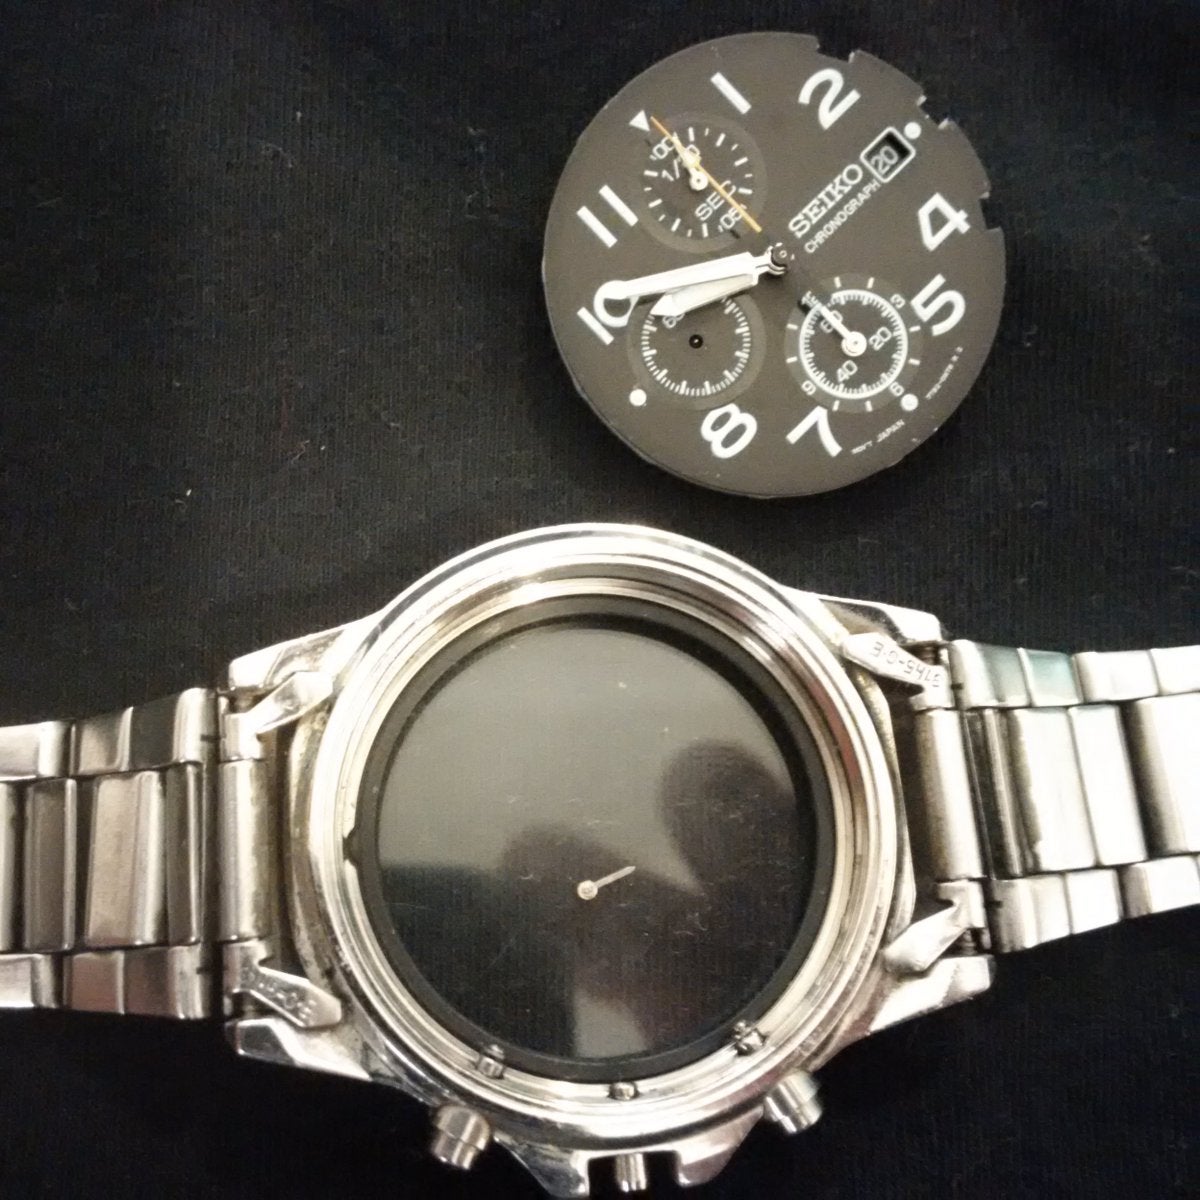 Seiko chronograph | The Watch Site